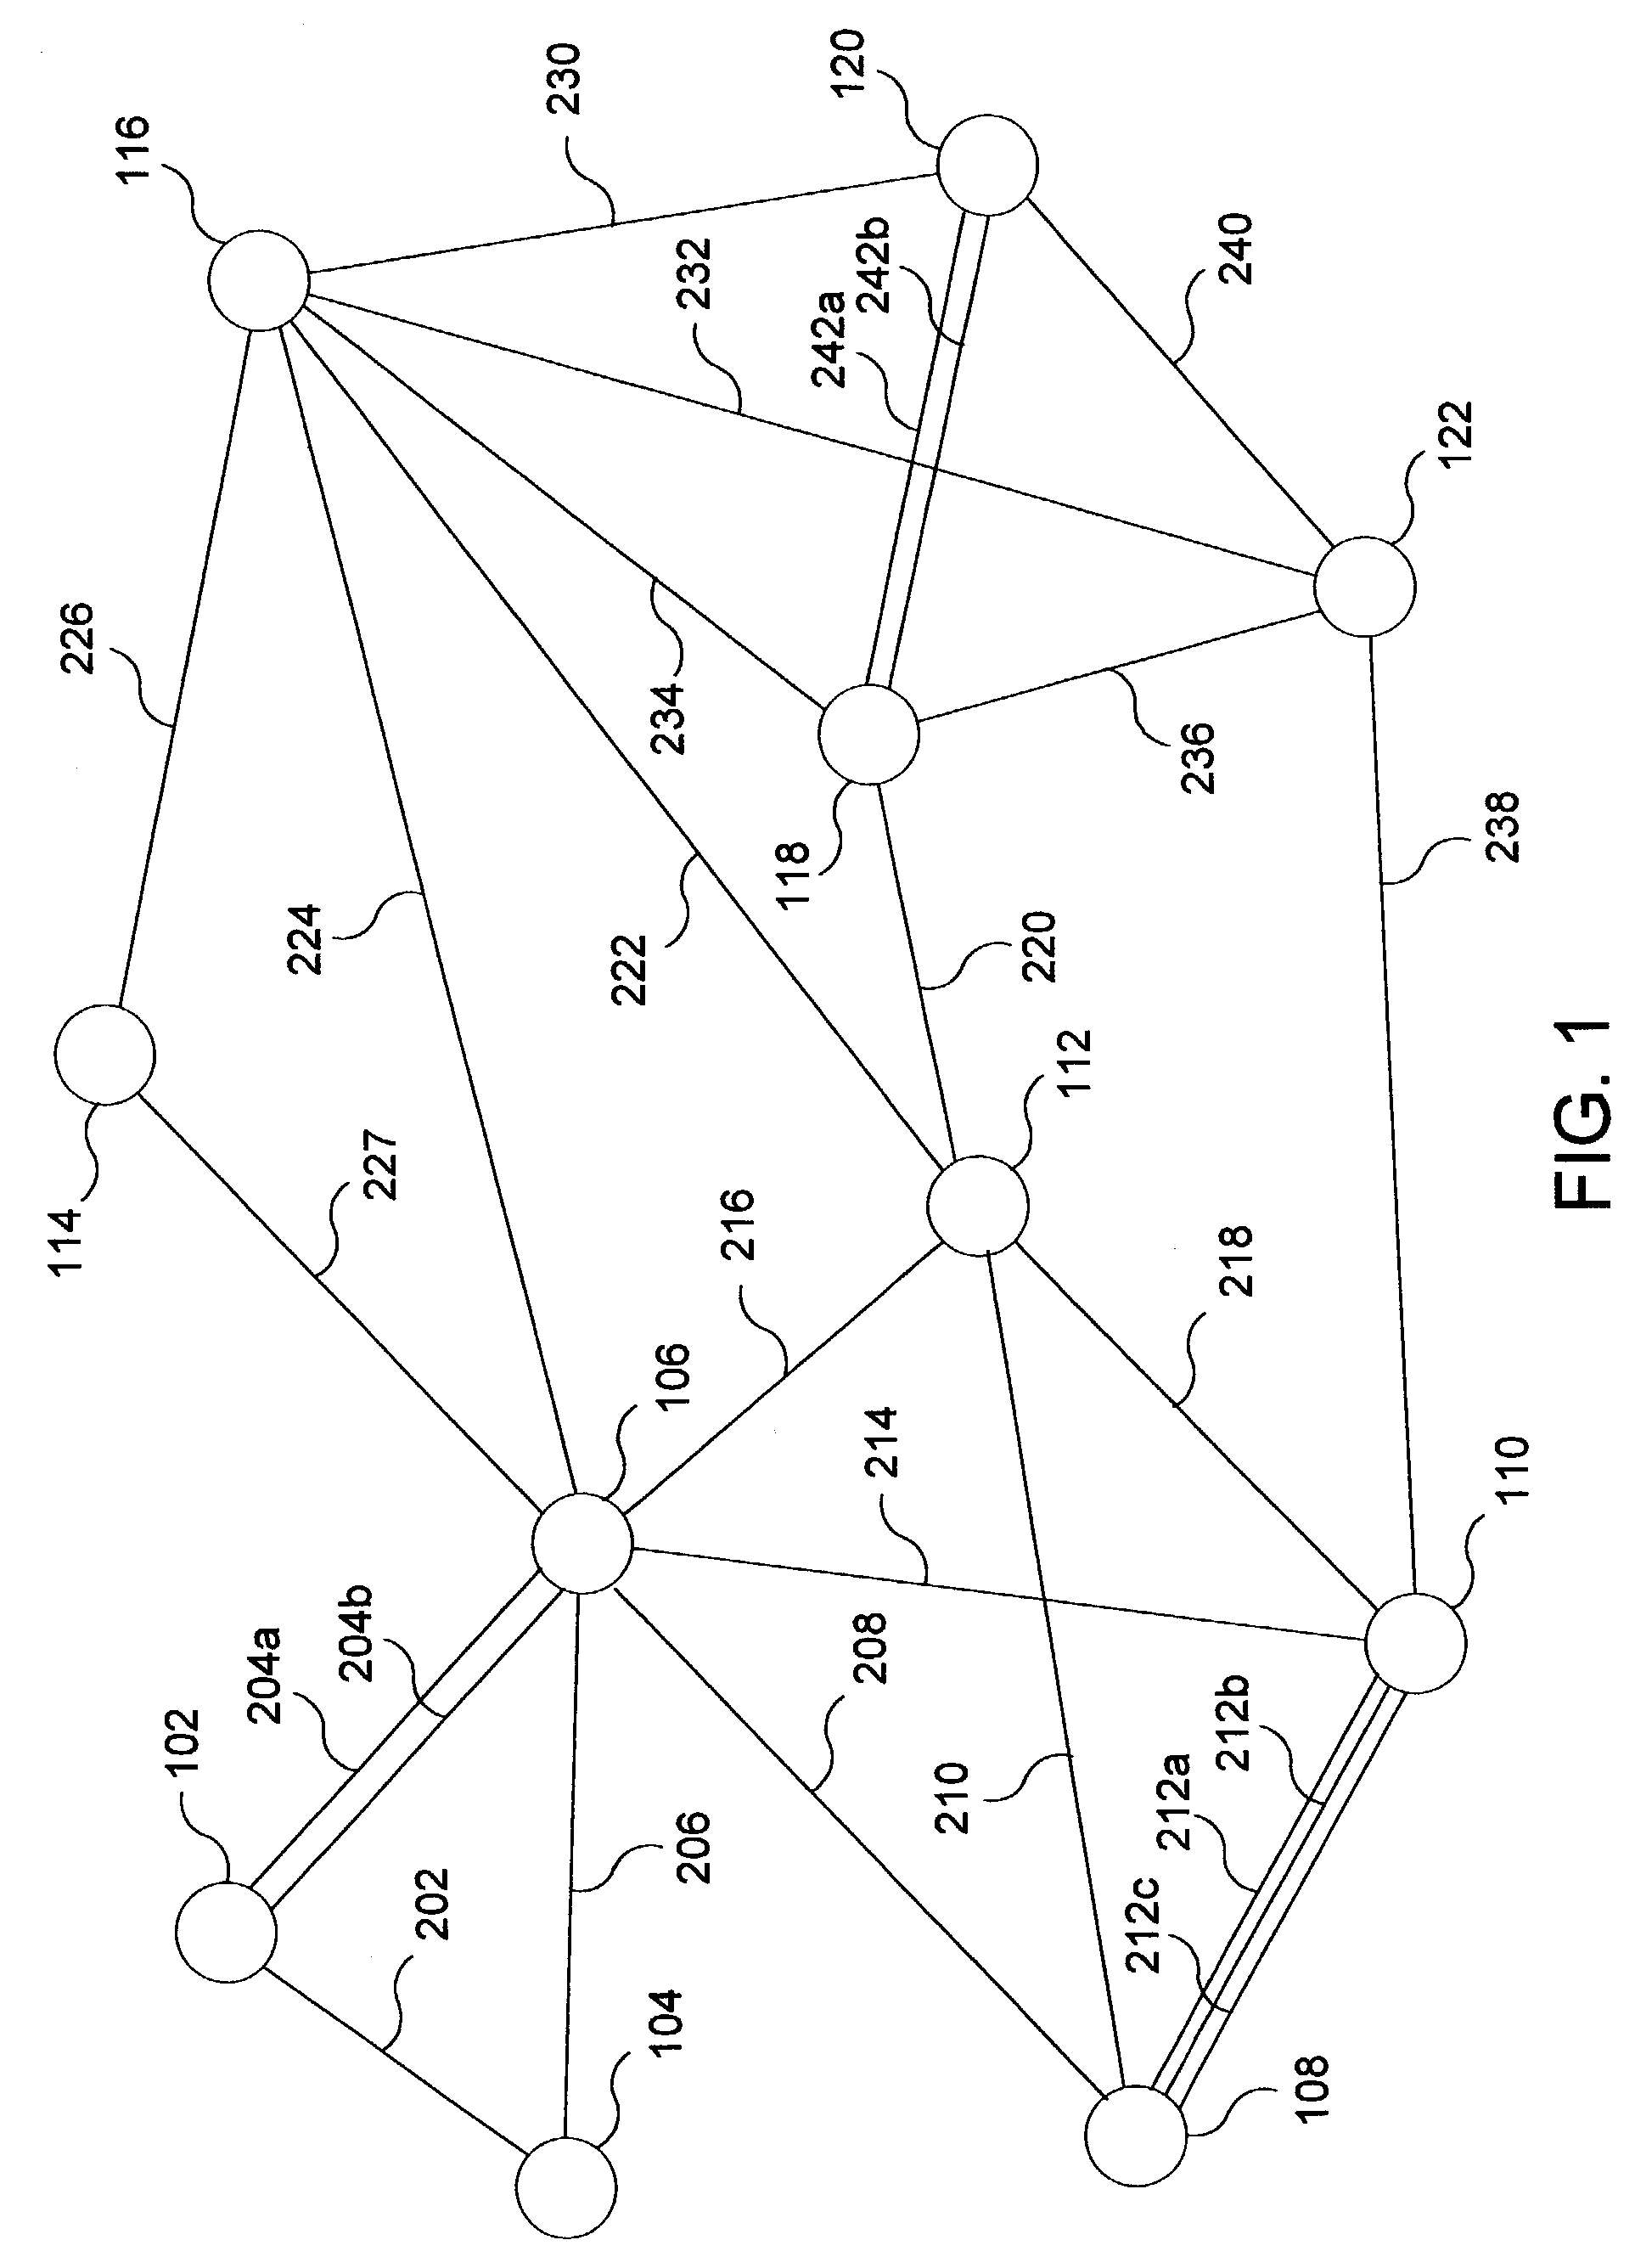 Network segmentation method